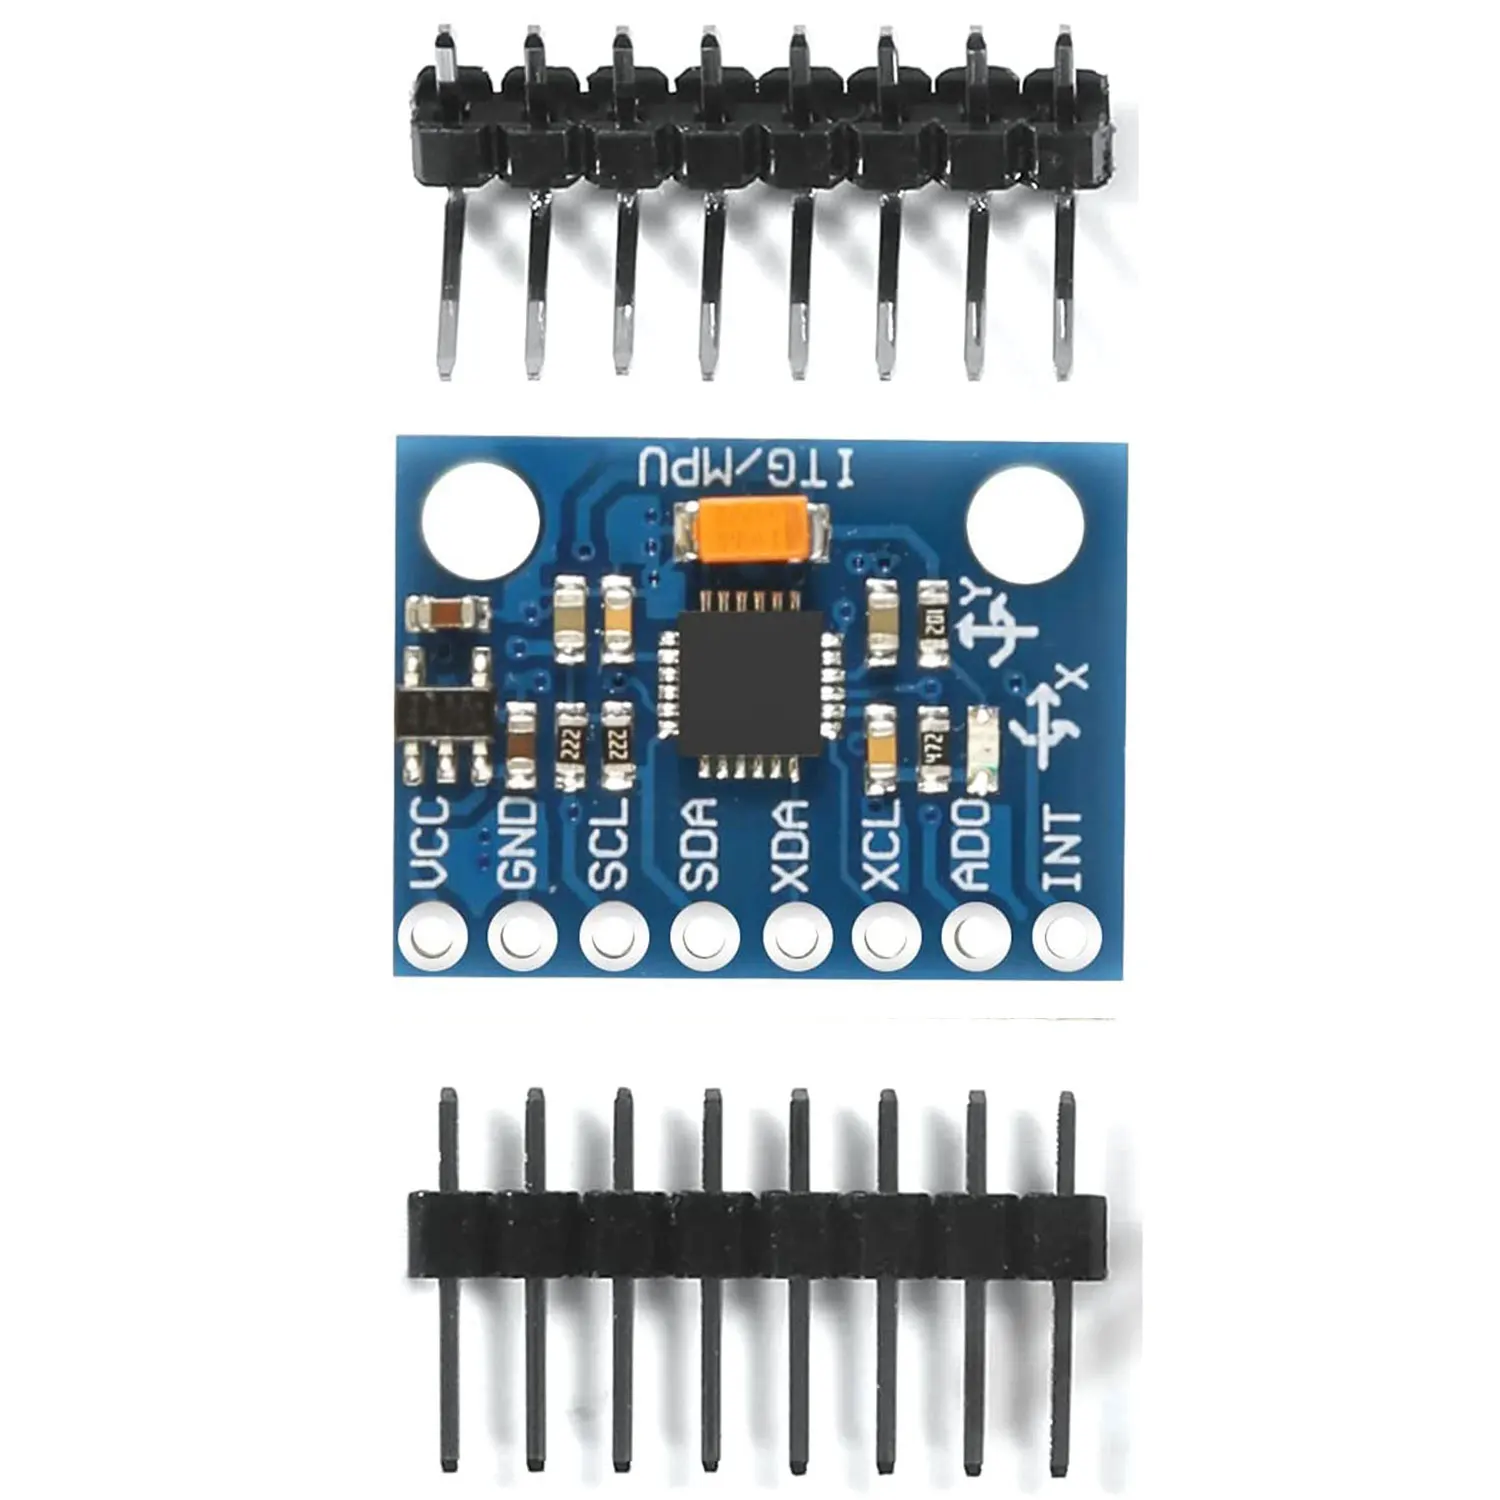 

GY-521 MPU-6050 MPU6050 3 Axis Accelerometer Gyroscope Sensors Module 16 Bit AD Converter Data Output IIC I2C for Arduino